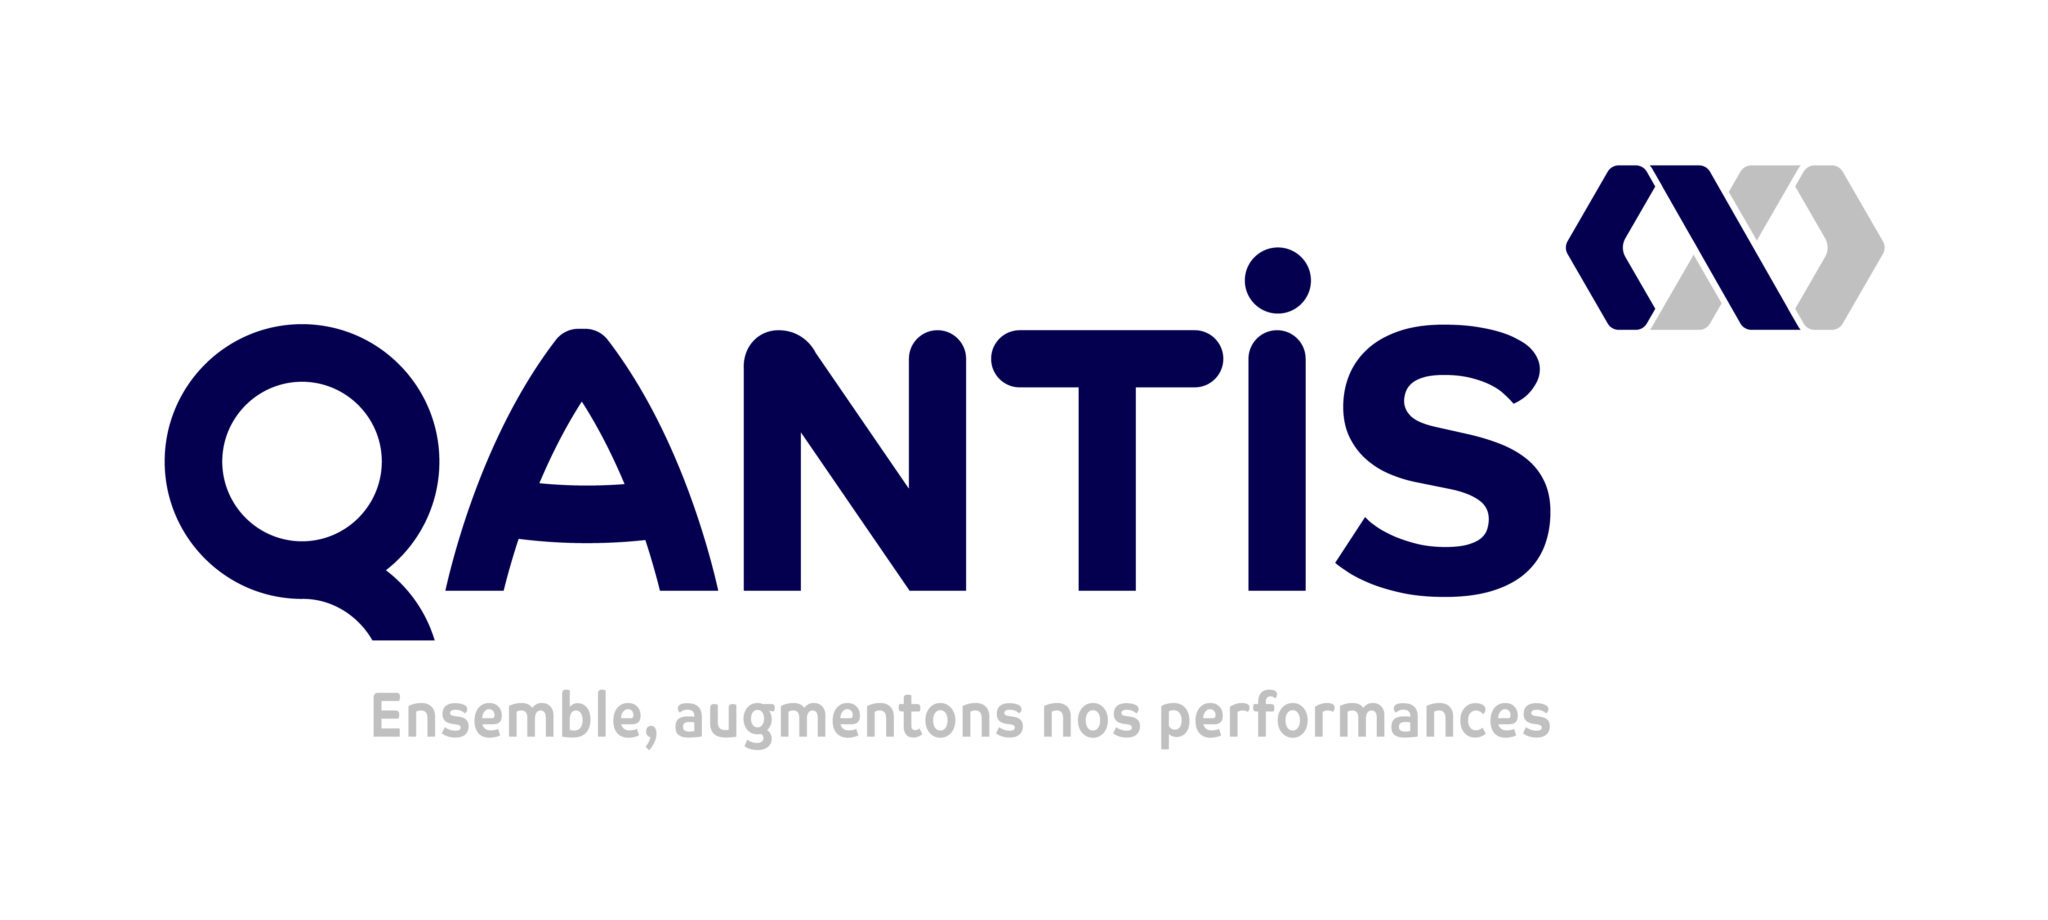 Qantis logo